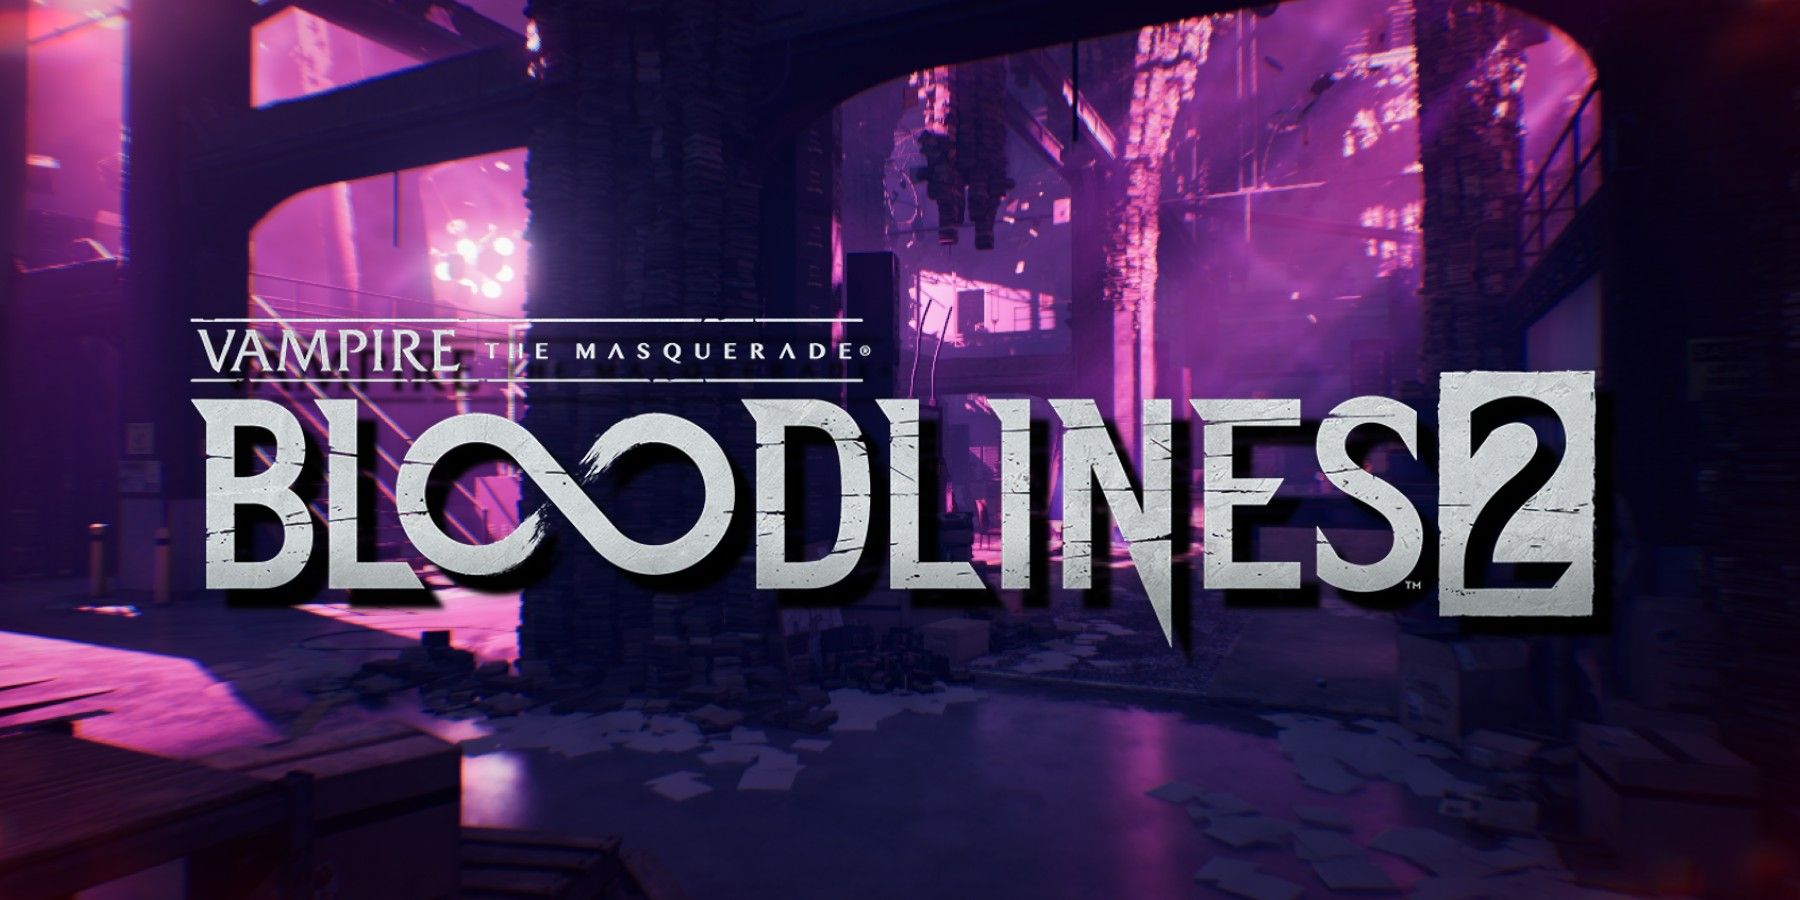 vampire-the-masquerade-bloodlines-2-logo-gameplay-background